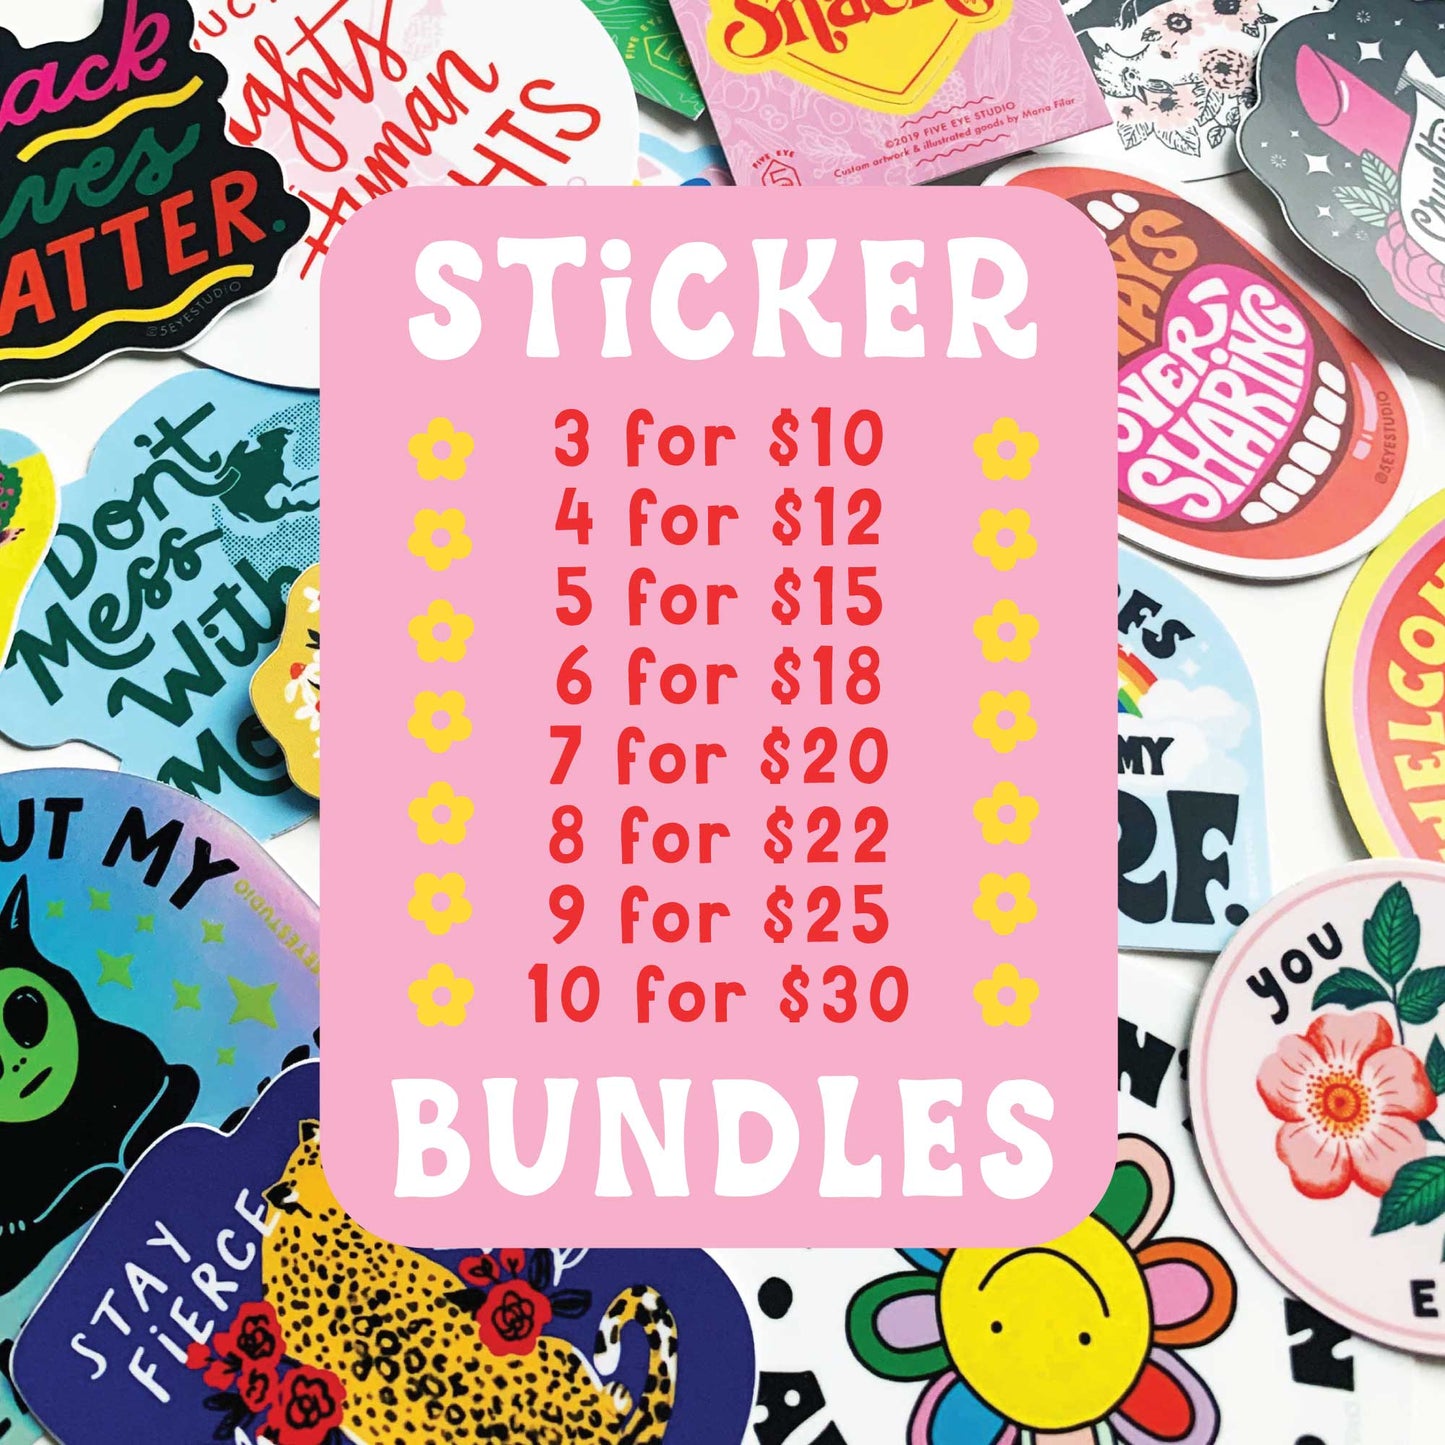 Sticker Bundles - Buy More, Save More